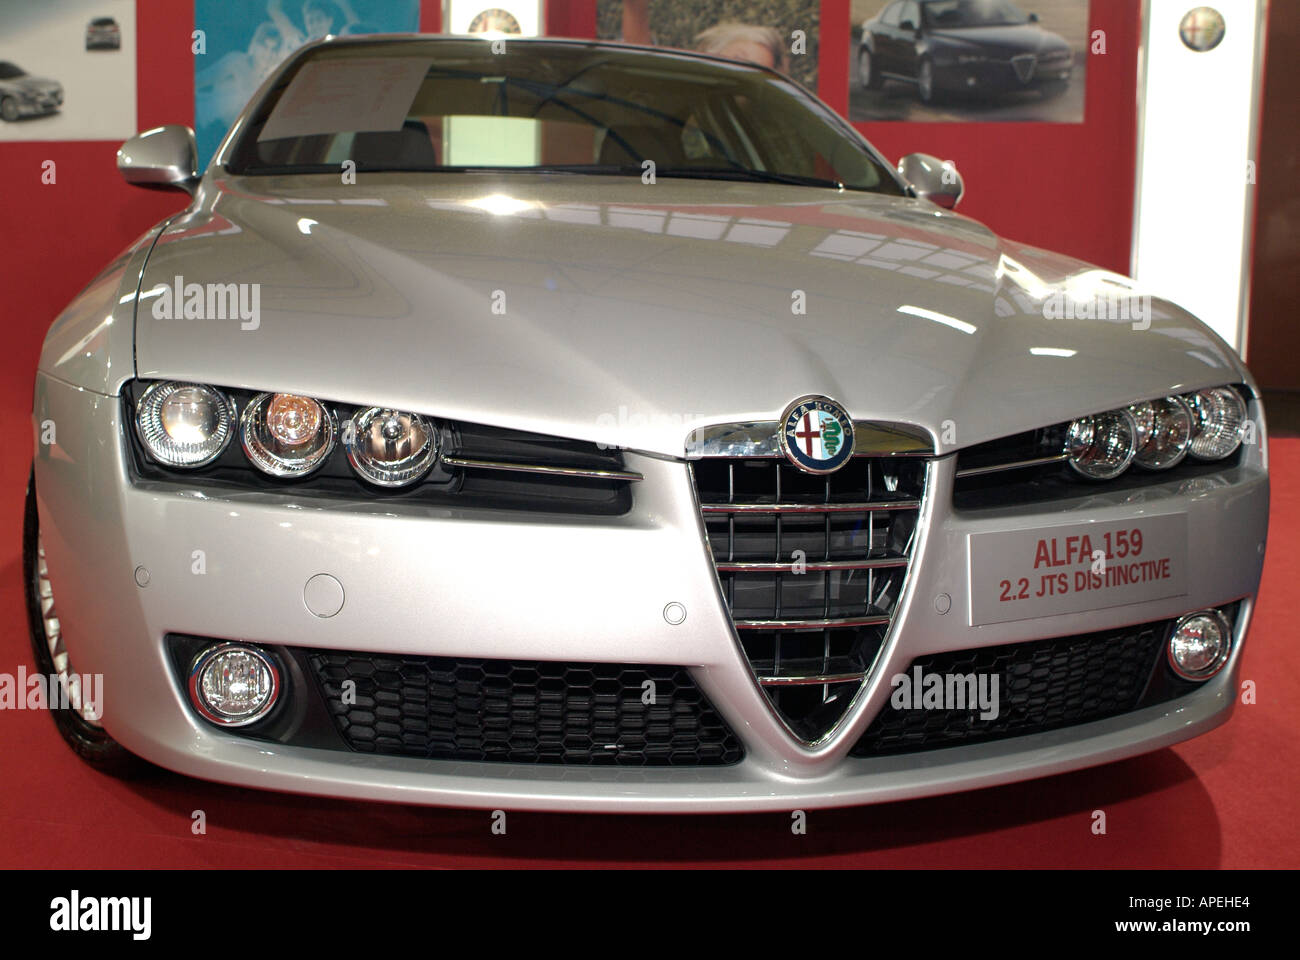 Metallic Silver Alfa Romeo 159 on Display at a Car Showroom Stock Photo